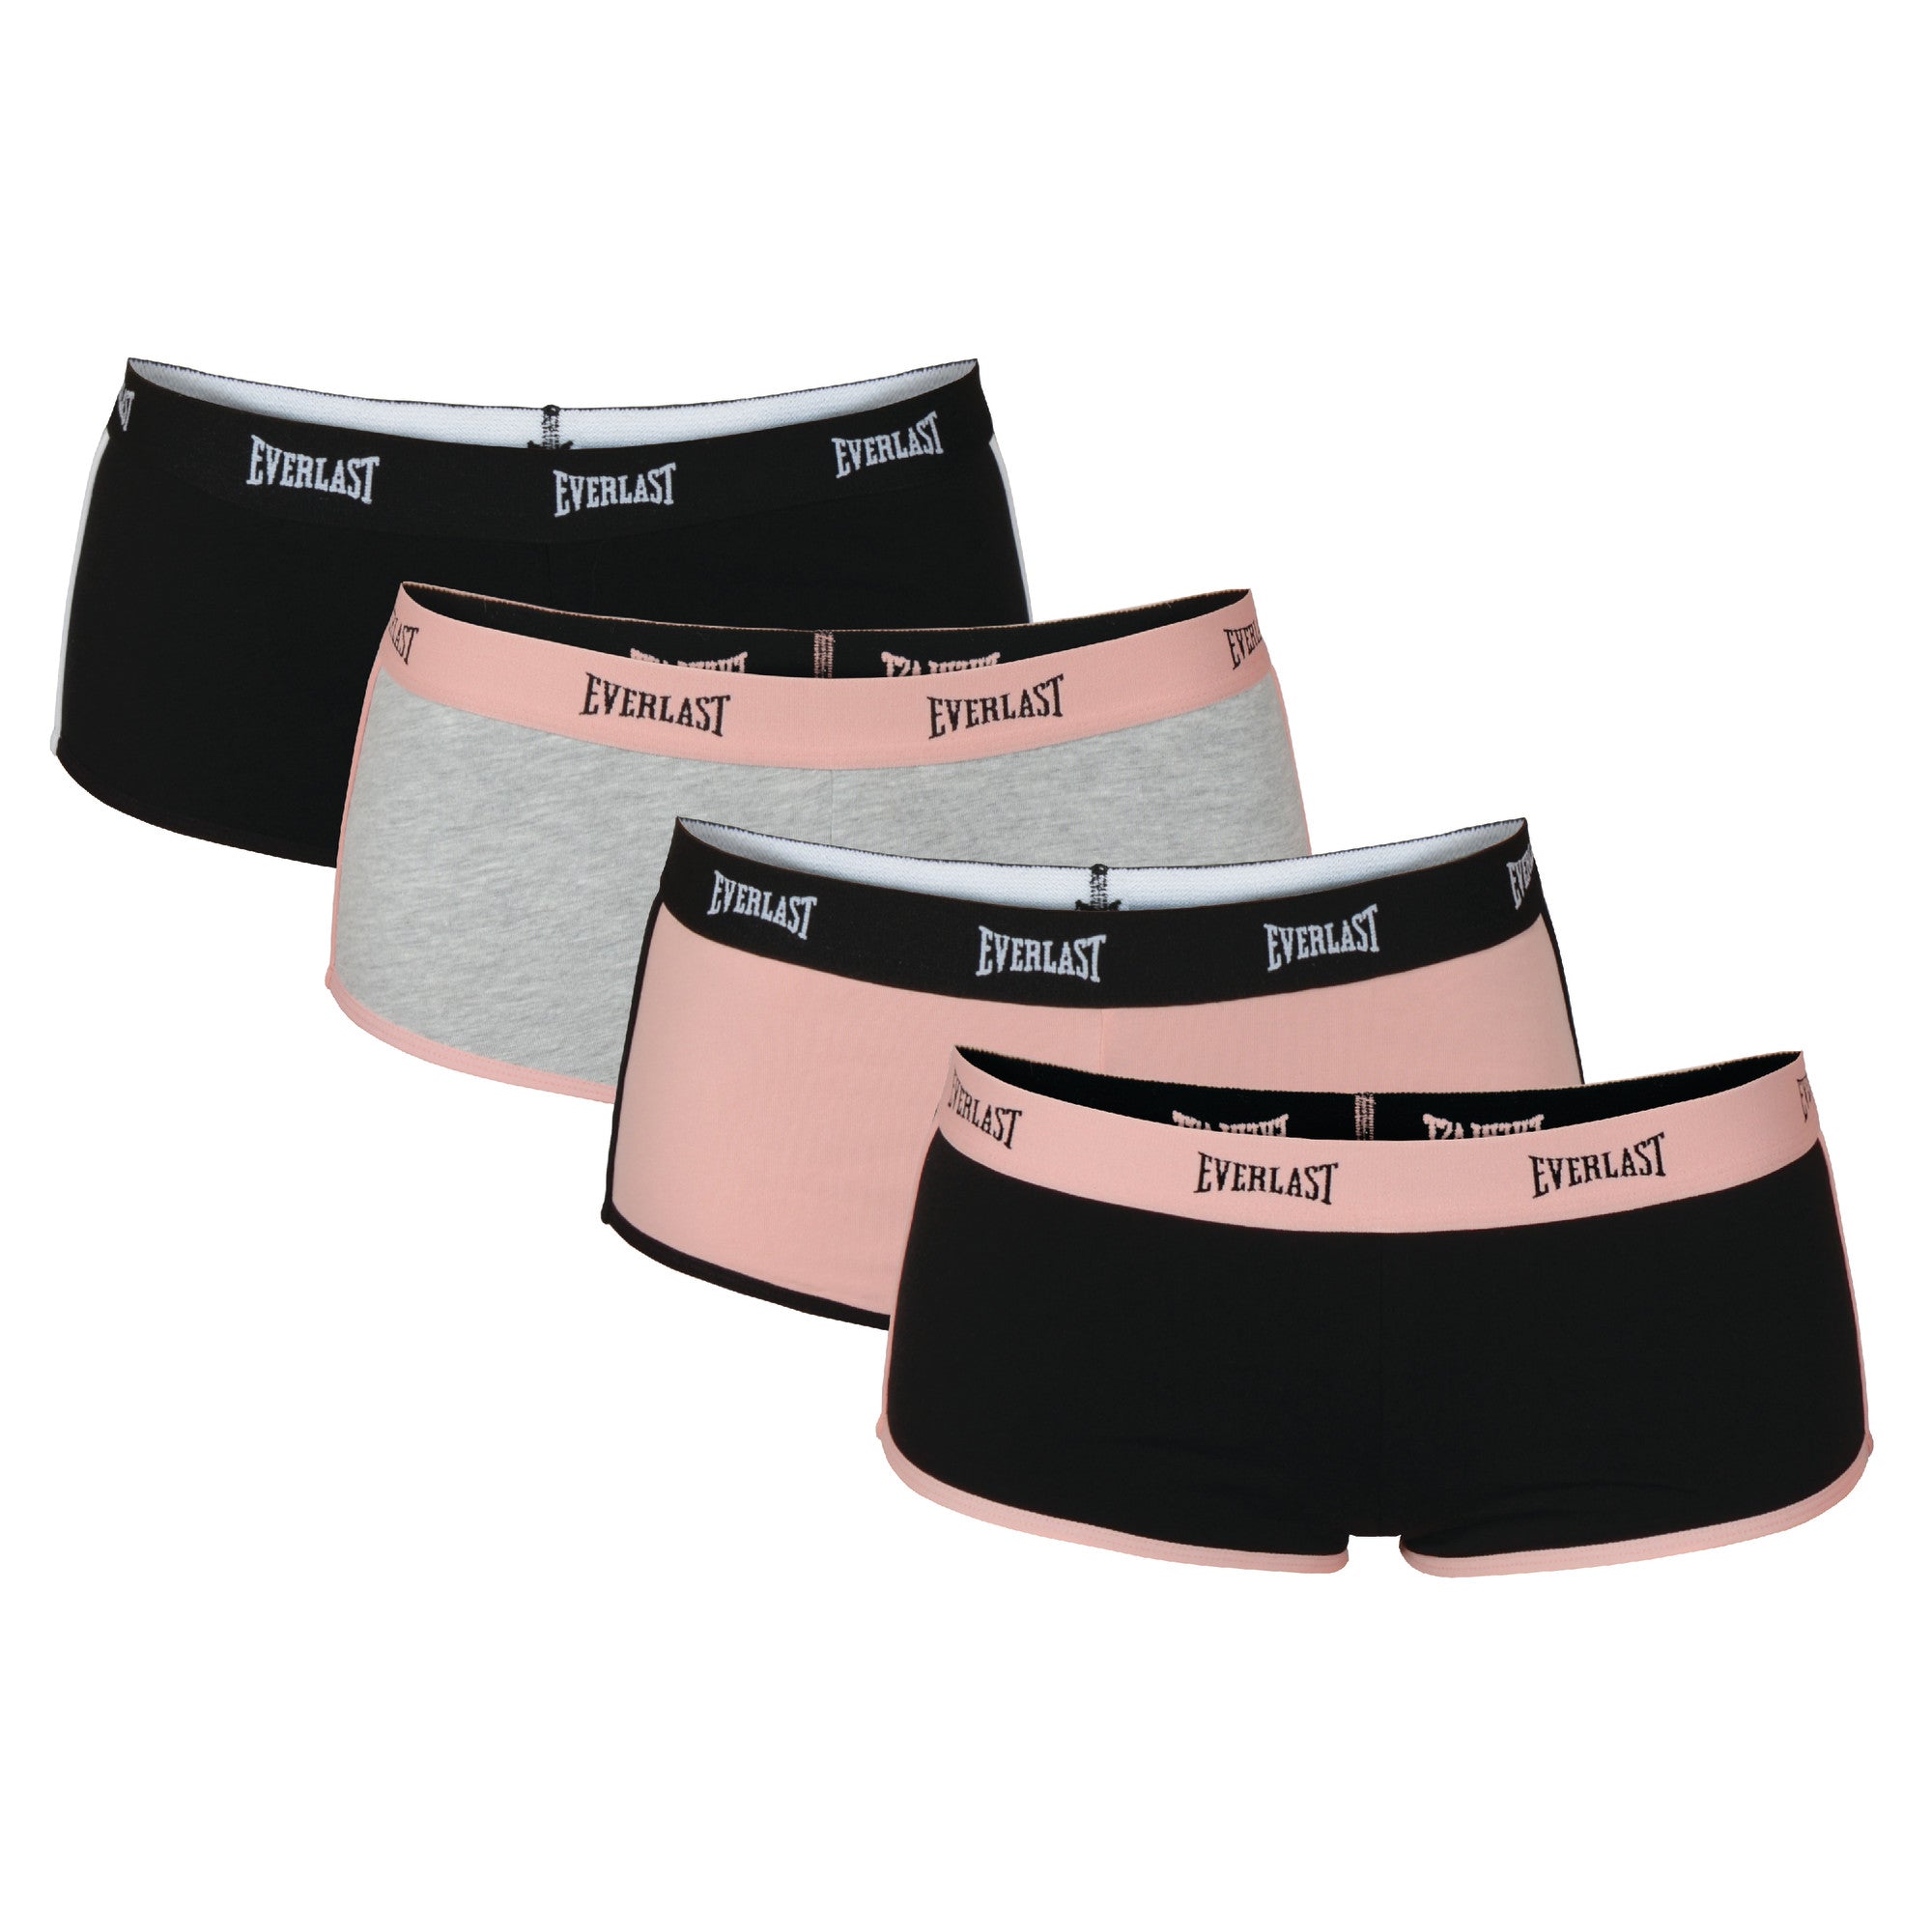 Boy Shorts Underwear for Women, Cotton Women's Panties Lace Boyshort Slip  Pack - S